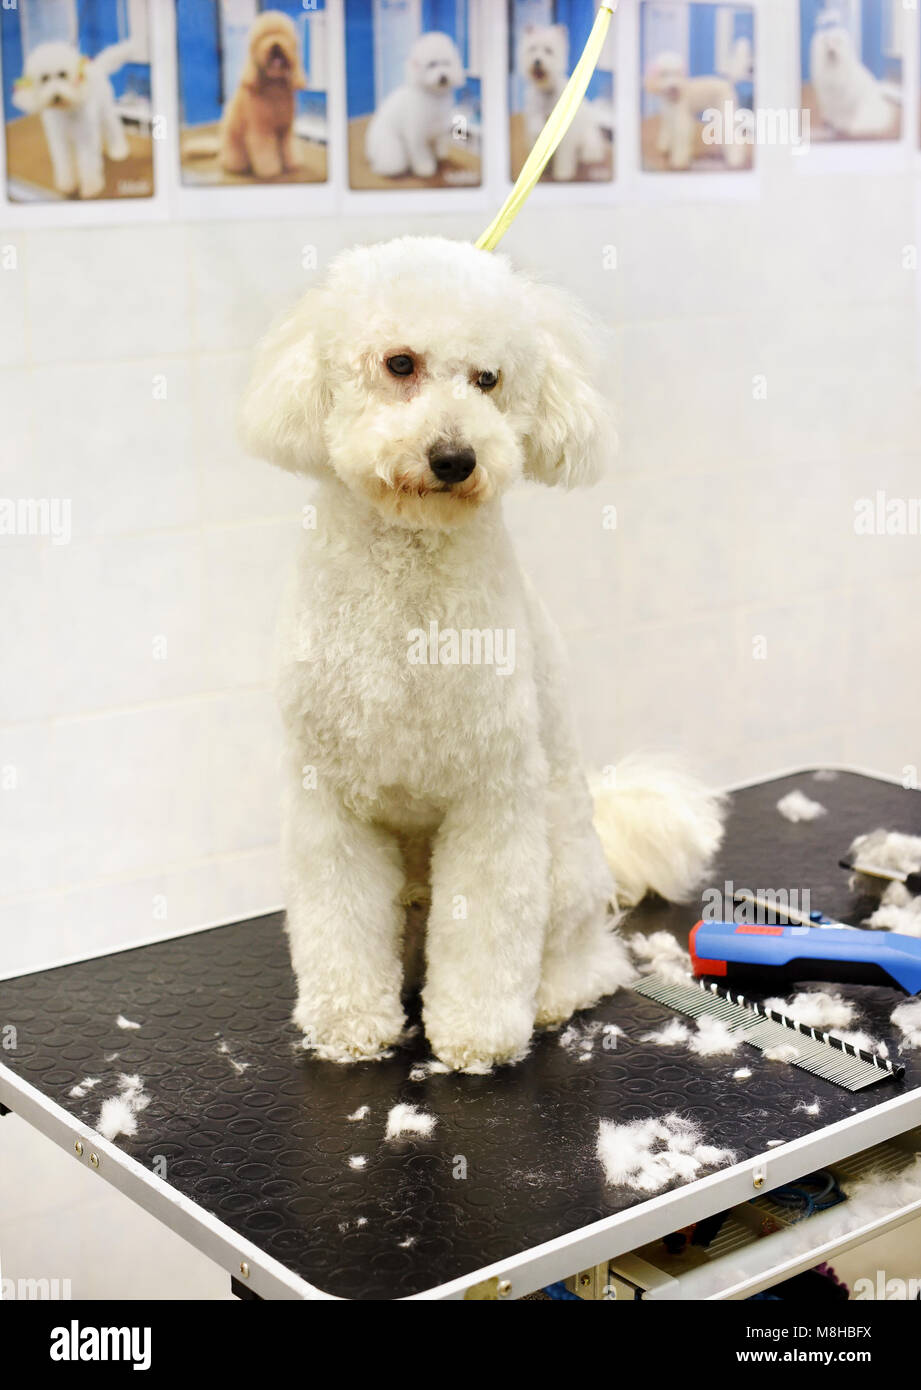 Cabaña Soportar Al frente Hair salon poodle fotografías e imágenes de alta resolución - Alamy